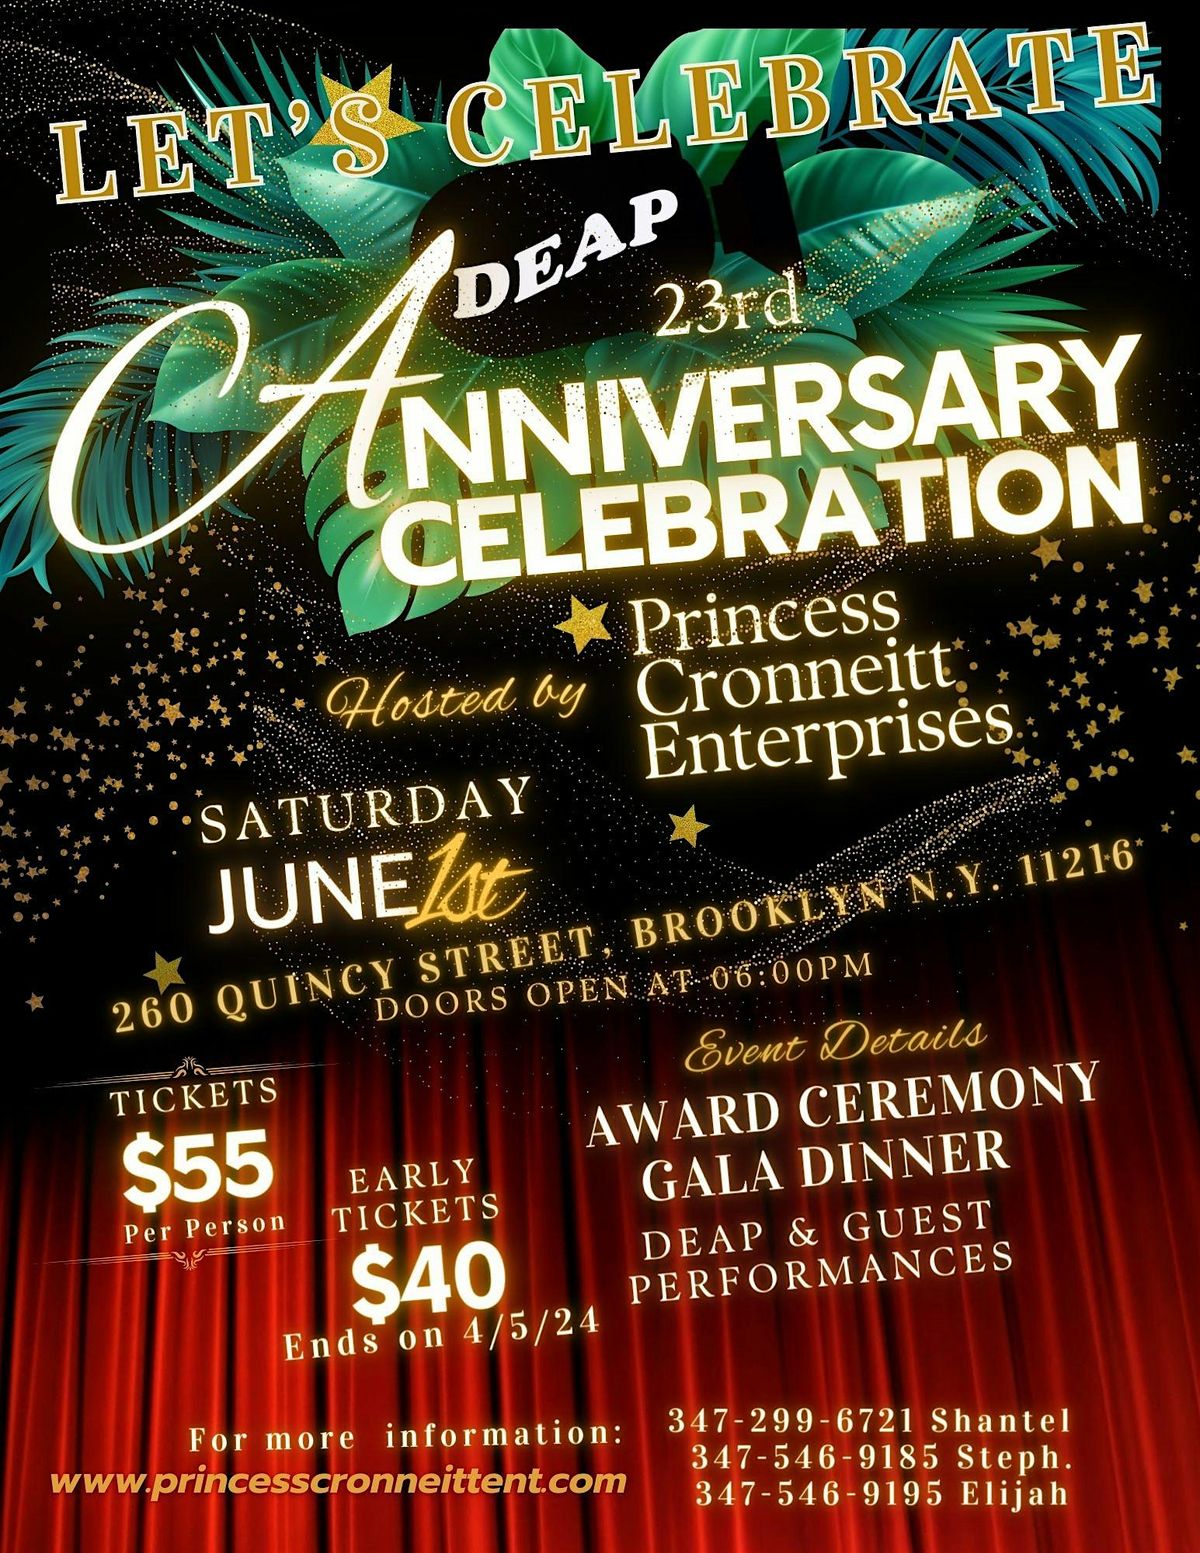 DEAP 23rd Anniversary Celebration Gala